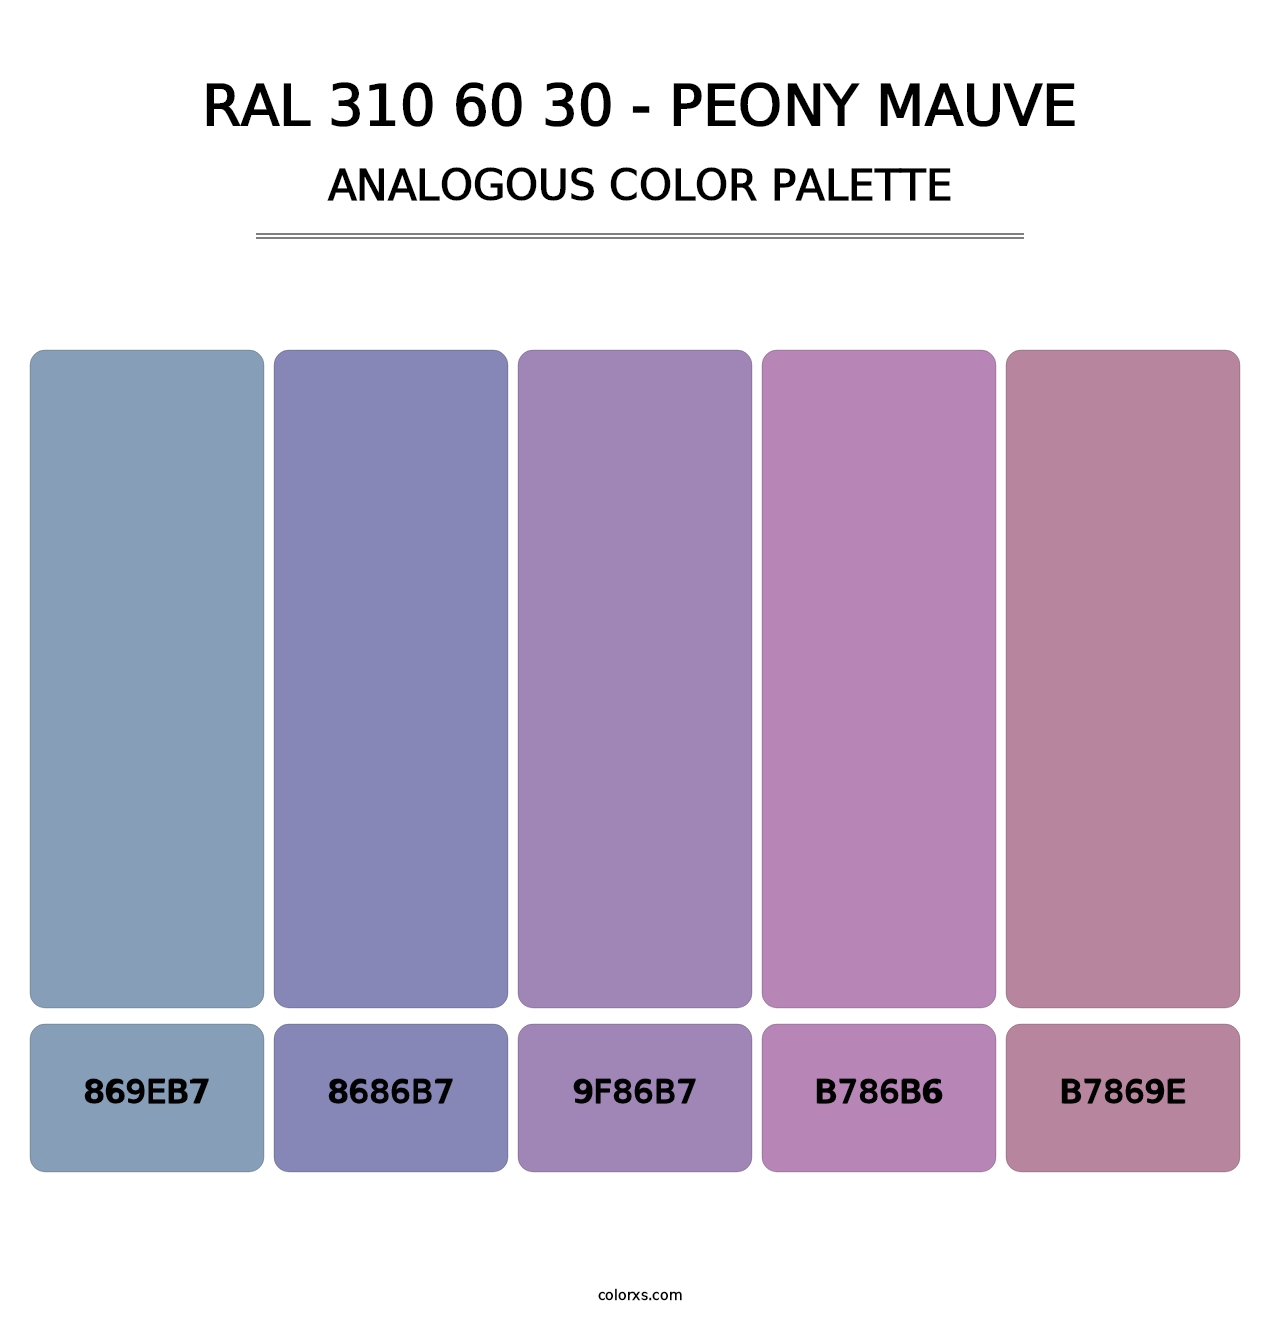 RAL 310 60 30 - Peony Mauve - Analogous Color Palette